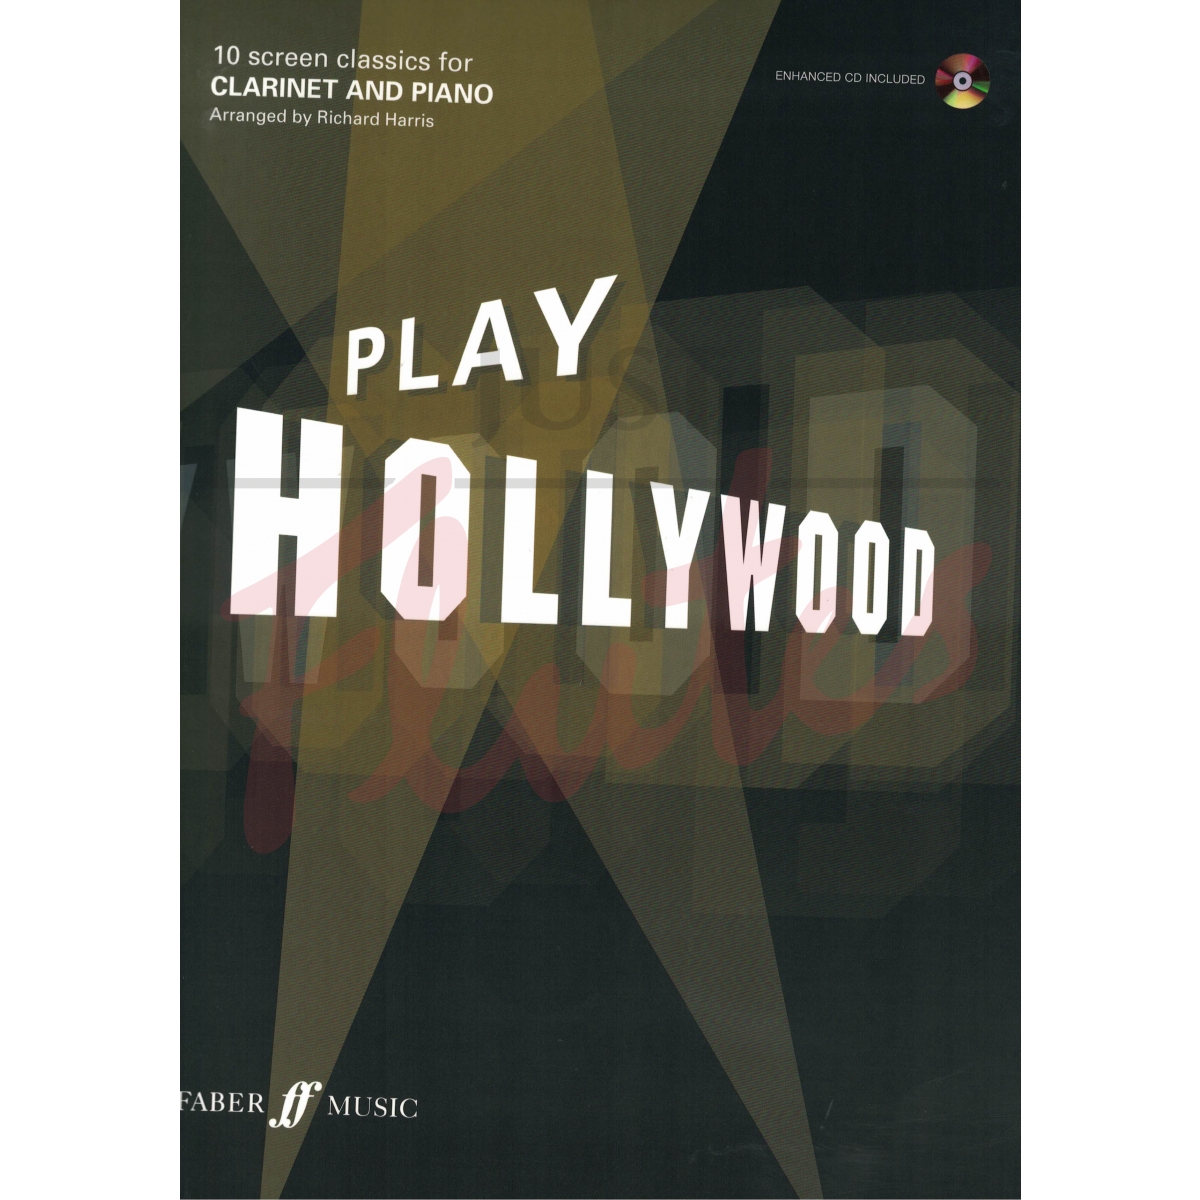 Play Hollywood: 10 Screen Classics [Clarinet and Piano]